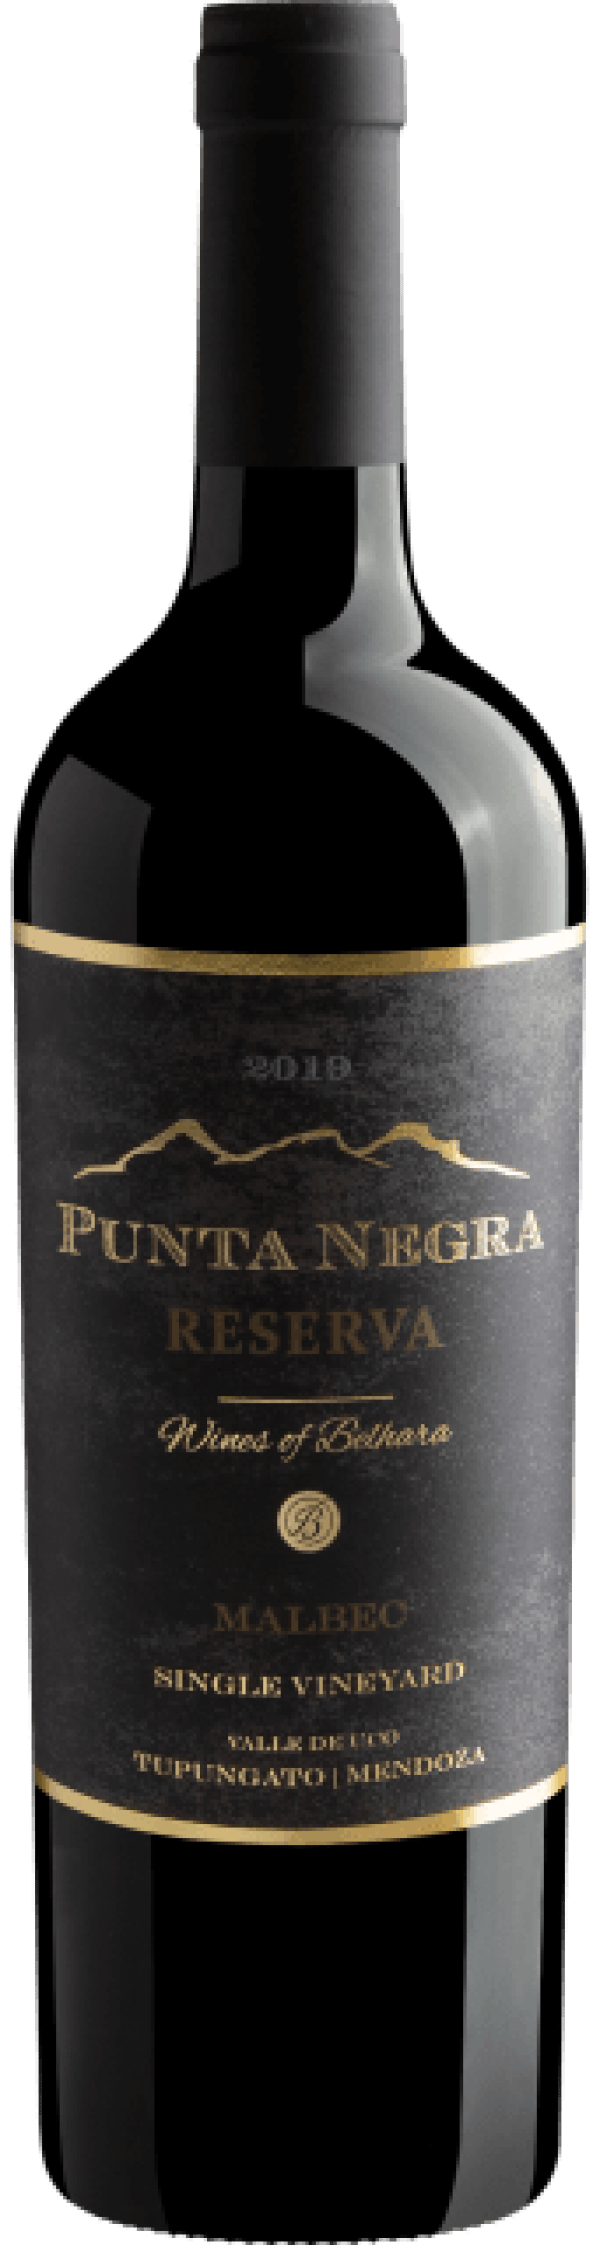 Punta Negra Reserva Malbec Single Vineyard 2019